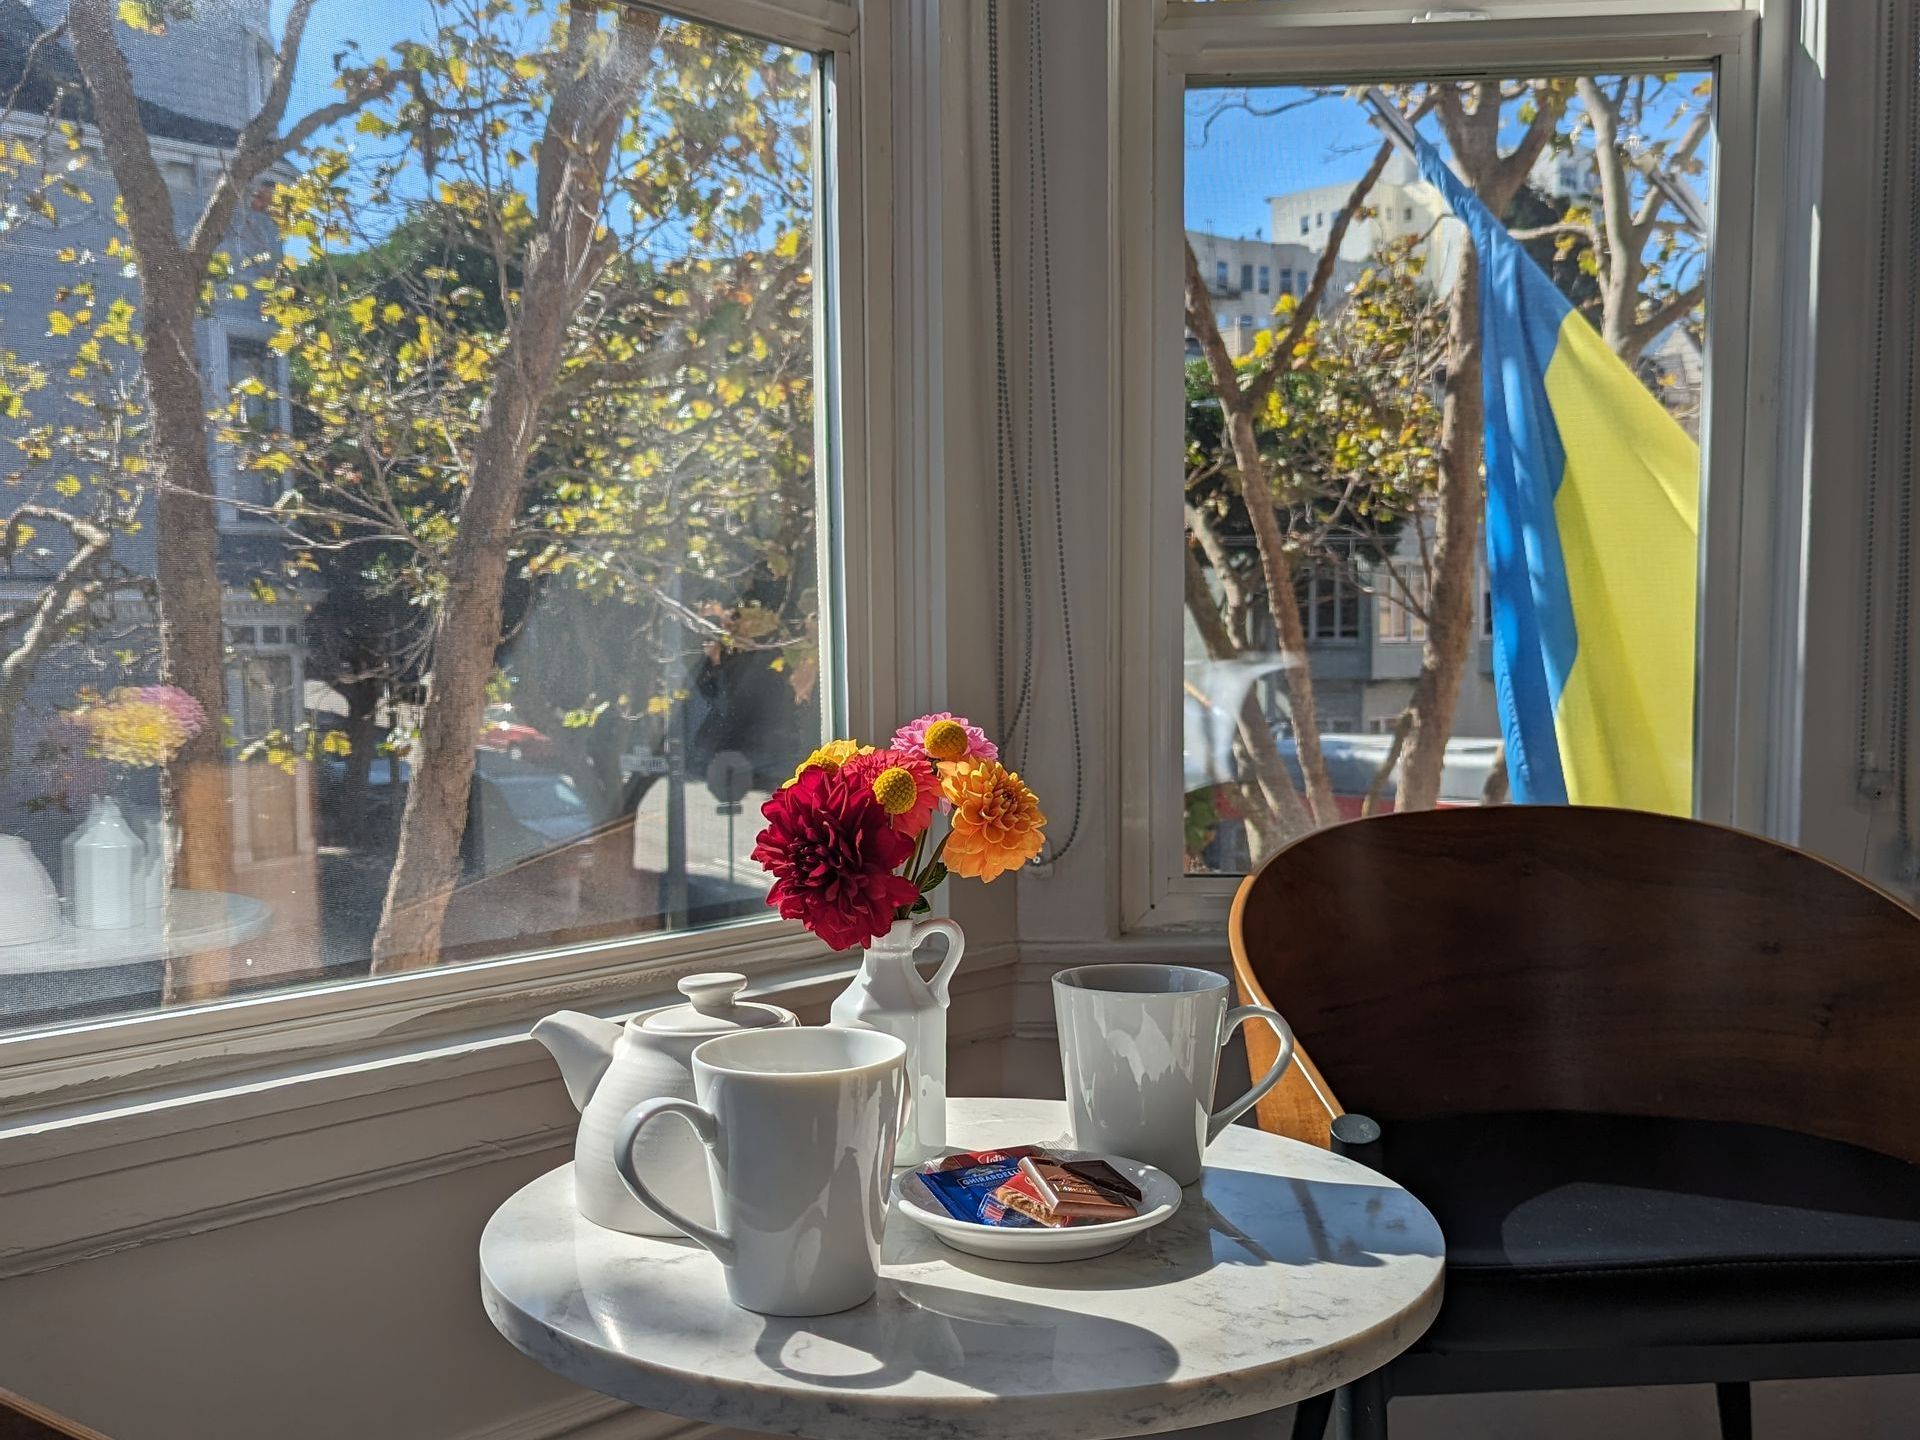 Tea by the window